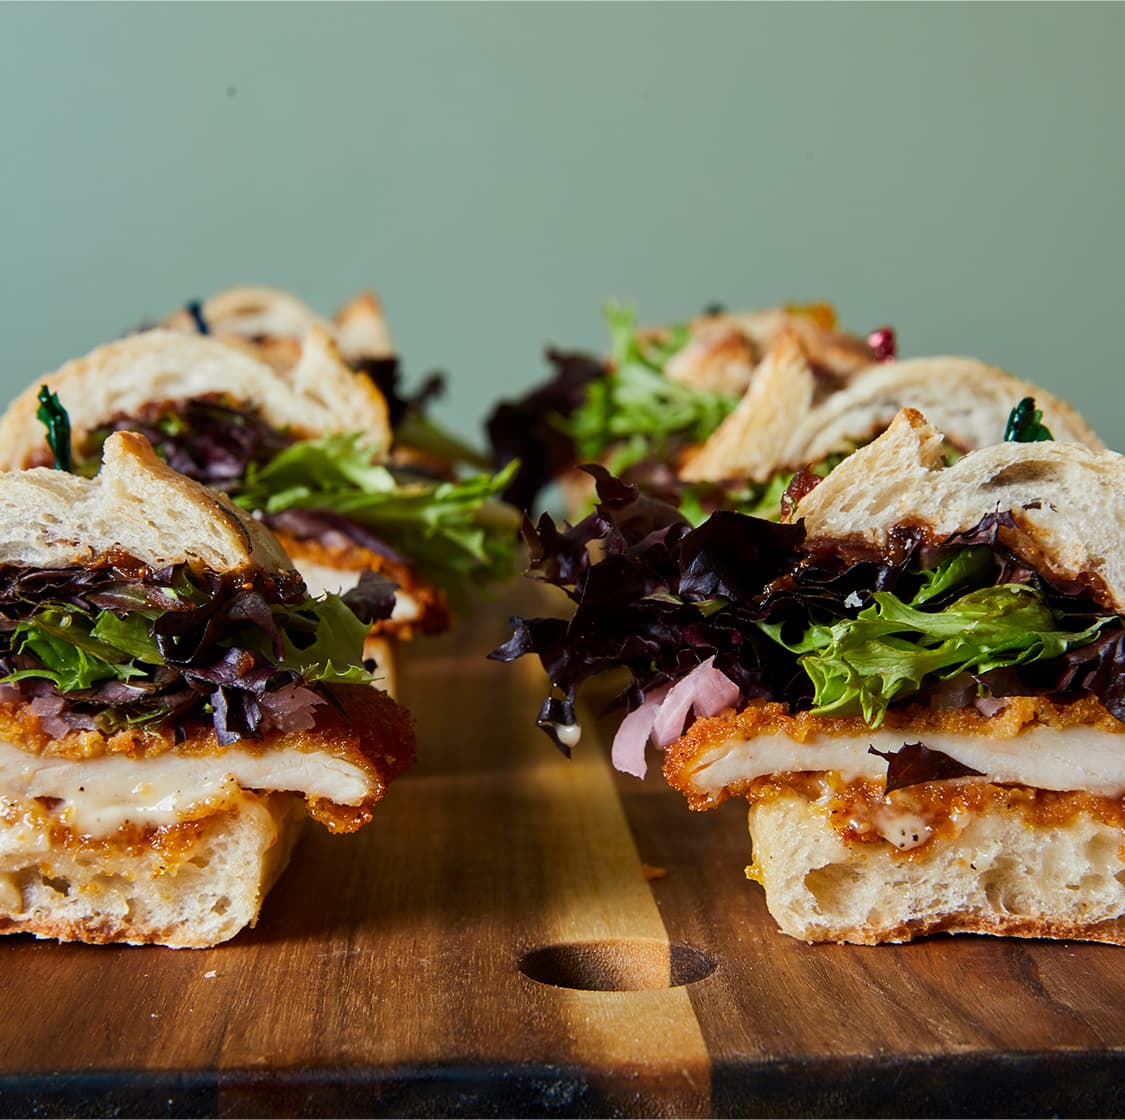 https://fleishigs.com/images/mobile-app/recipes/1250-list-schnitzel-sandwich.jpg